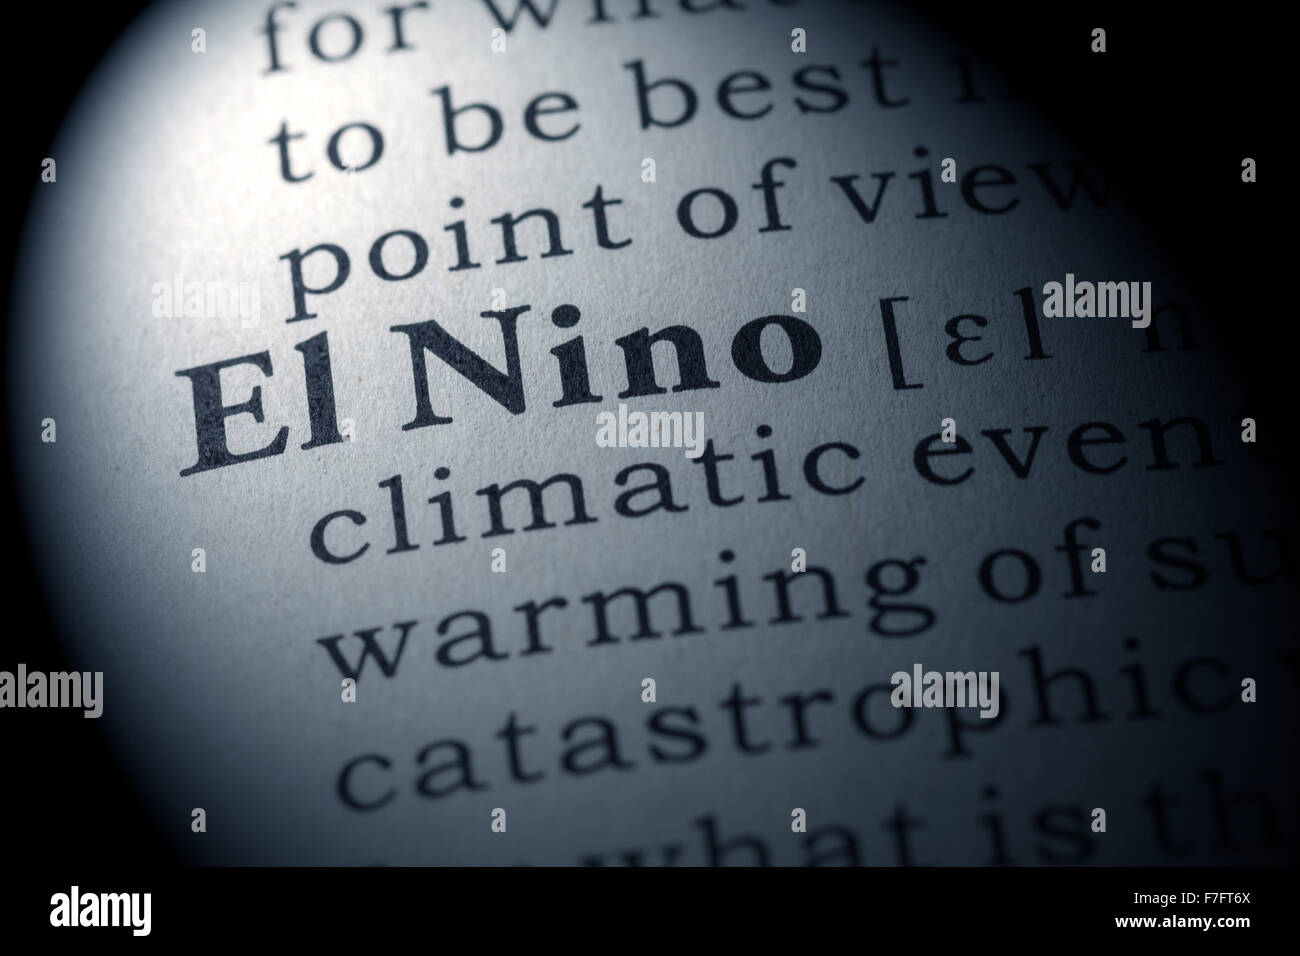 Fake Dictionary, Dictionary definition of the word El Nino Stock Photo